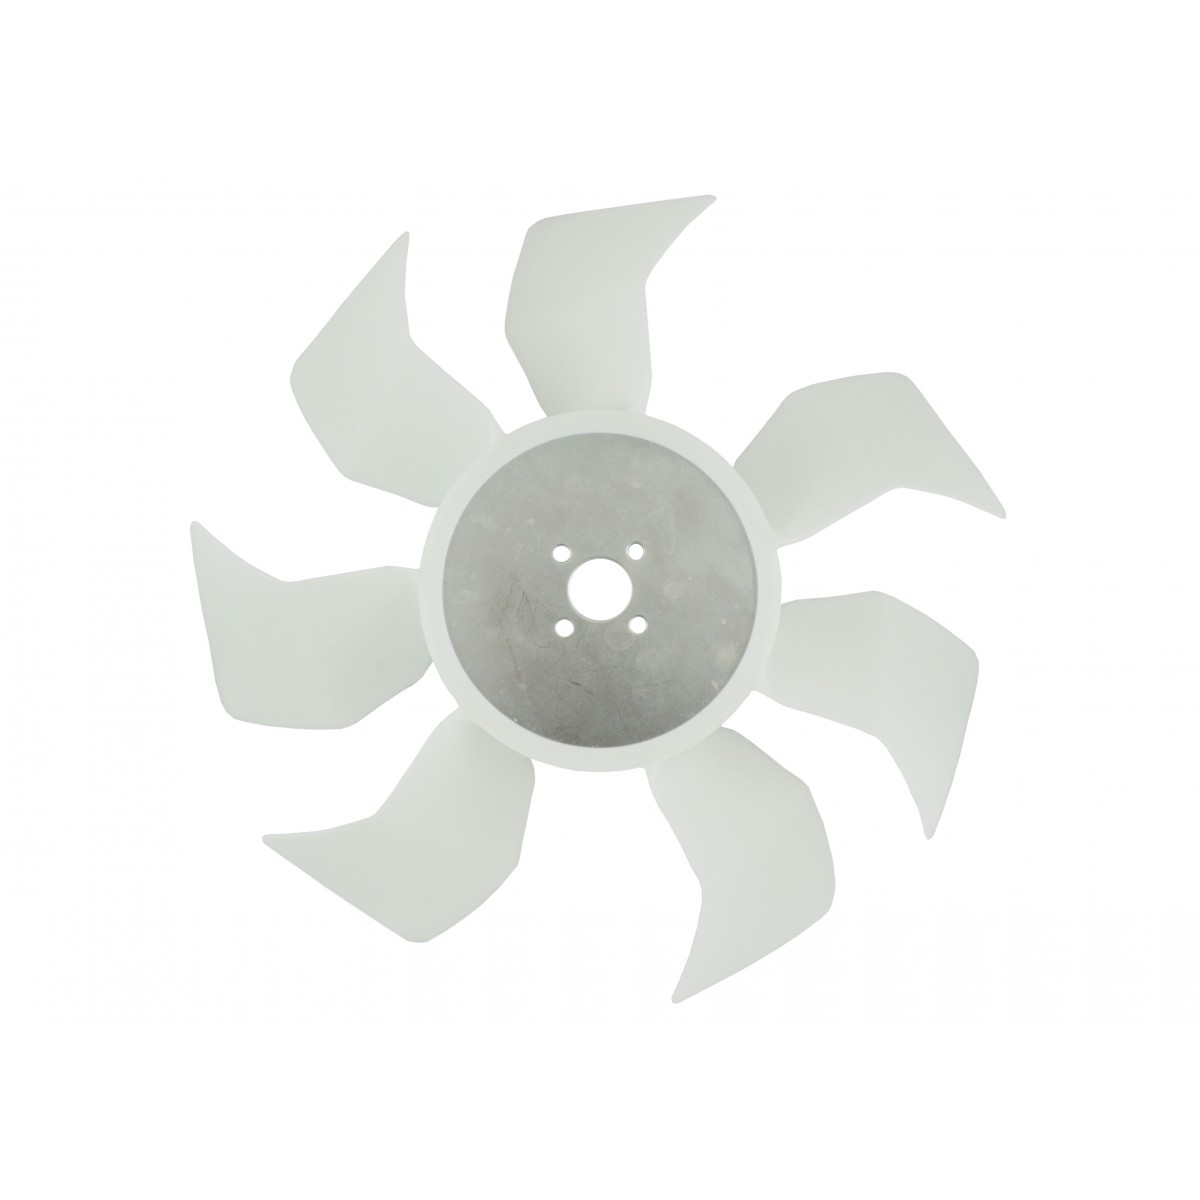 Kubota M9540 cooling fan, 7 blades, 425 mm